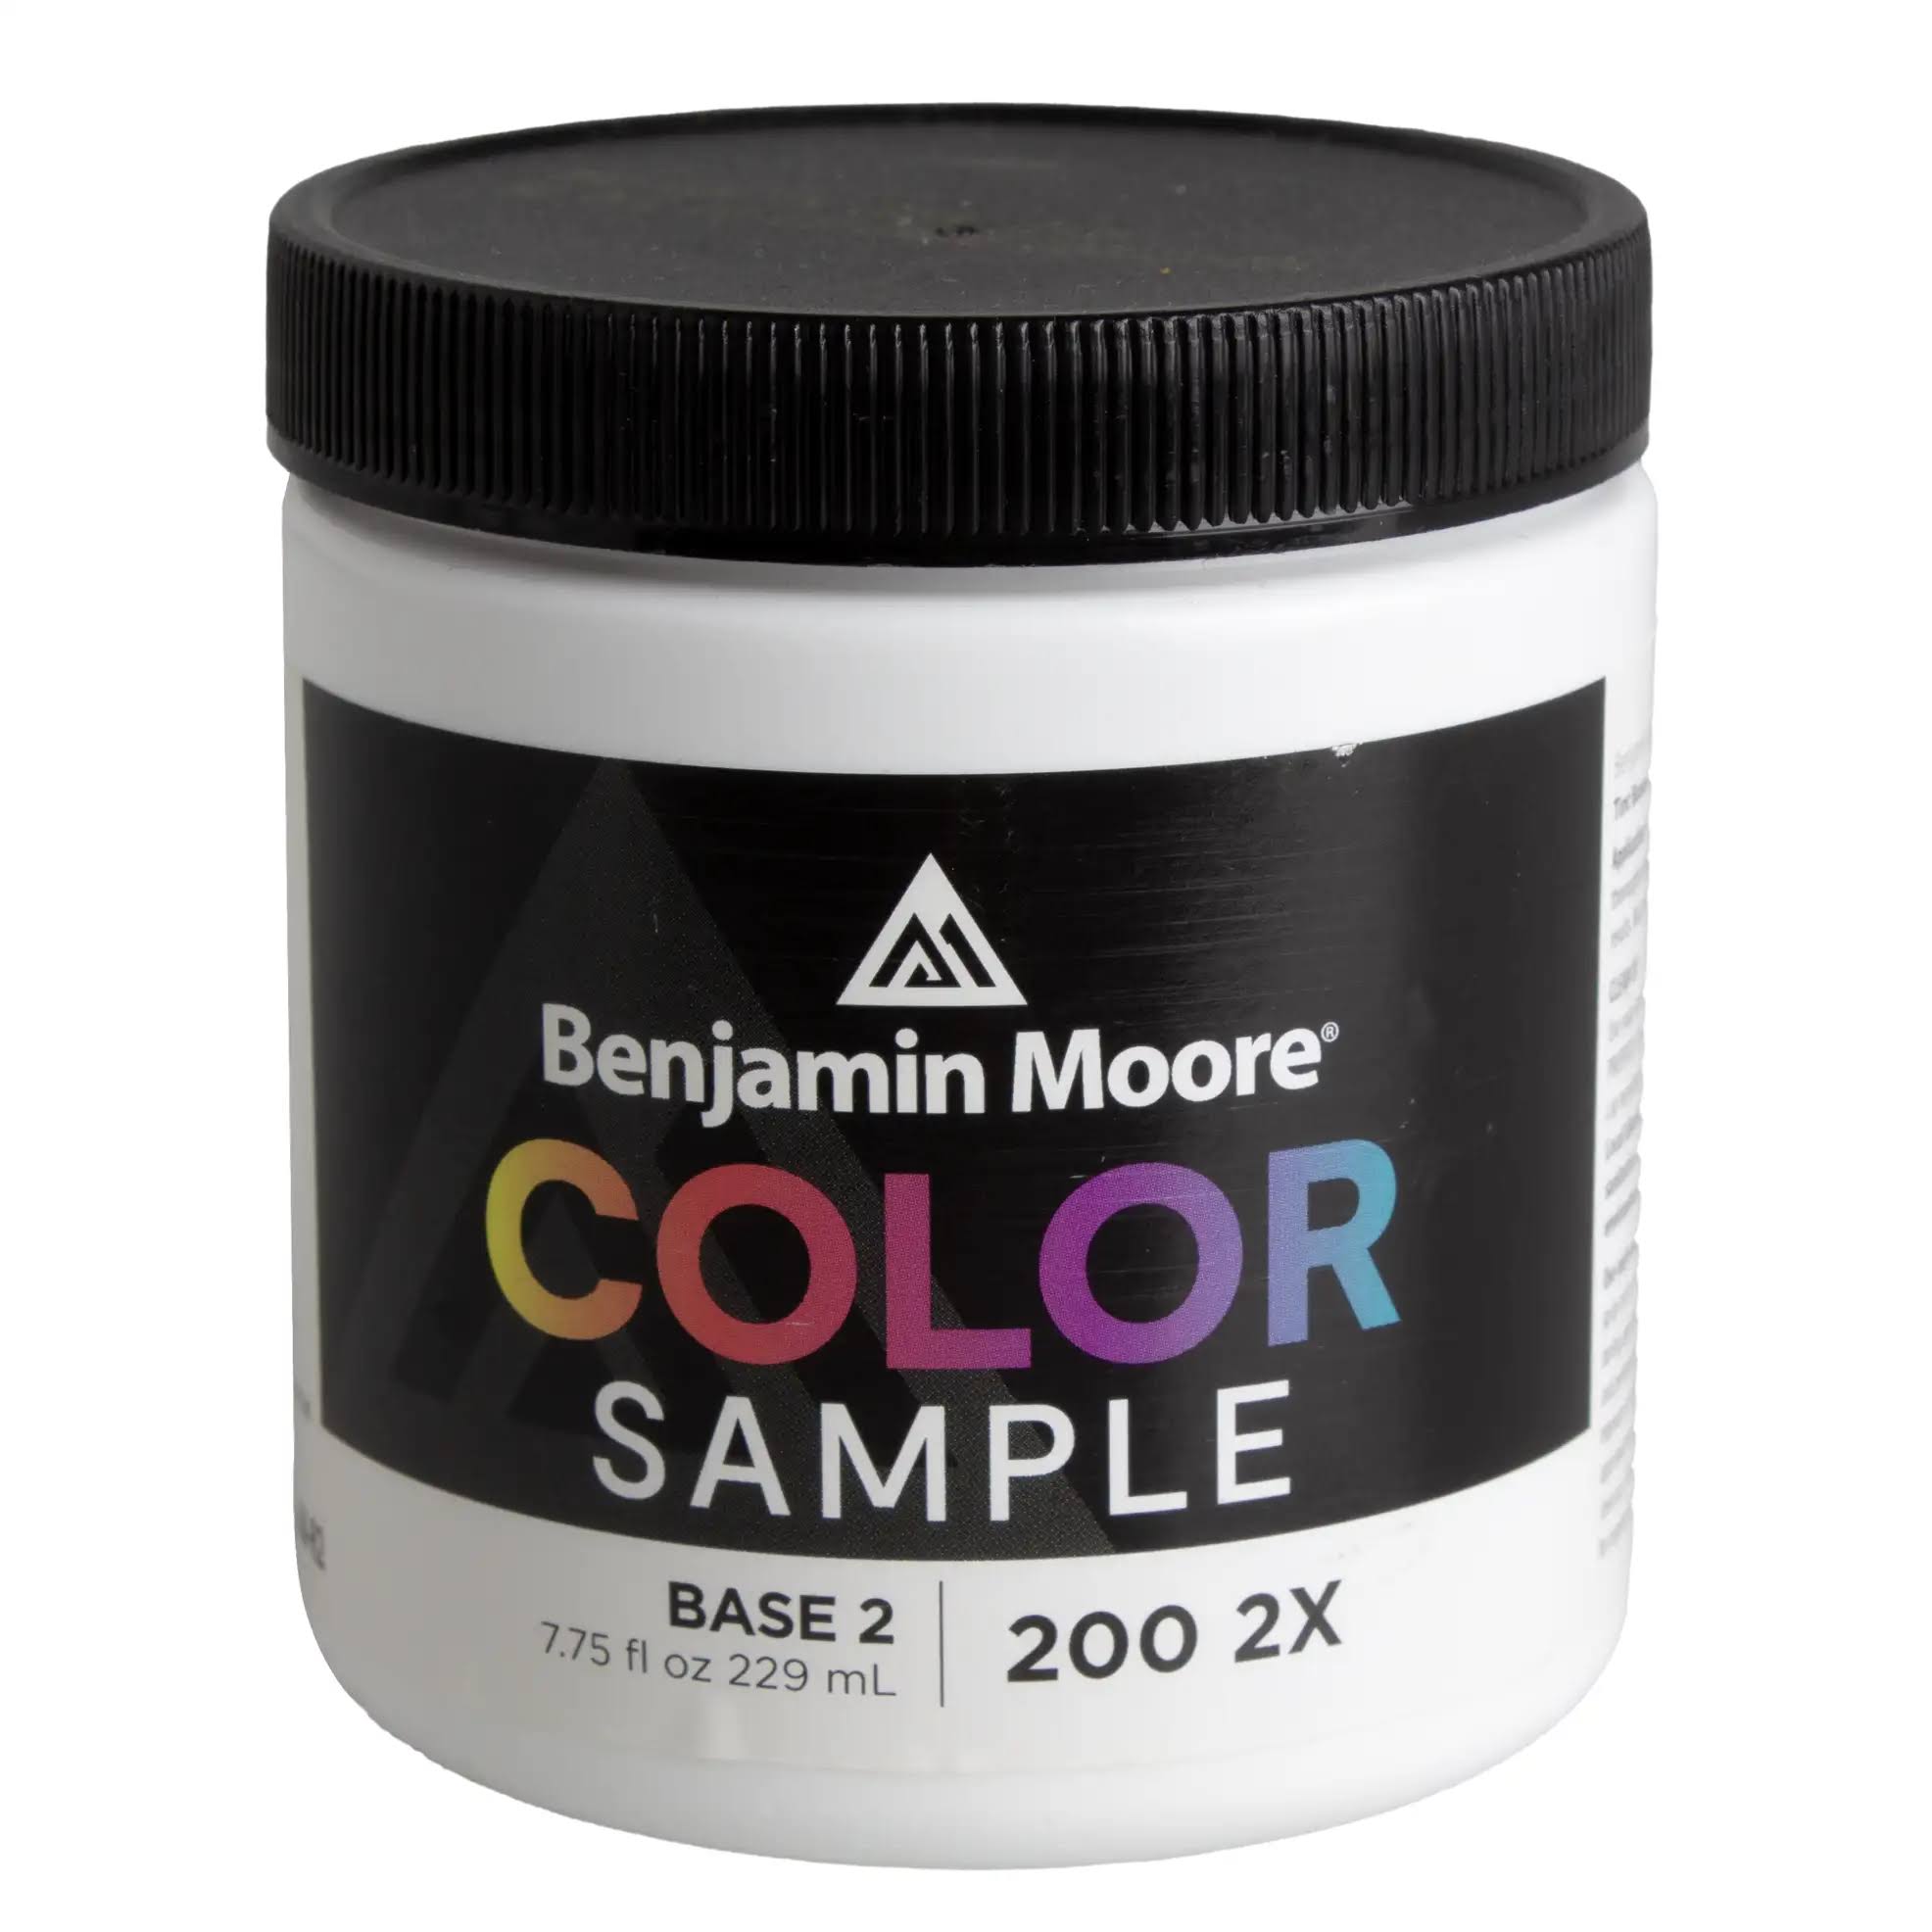 Benjamin Moore Eggshell Base 2 Paint Sample Interior 8 oz